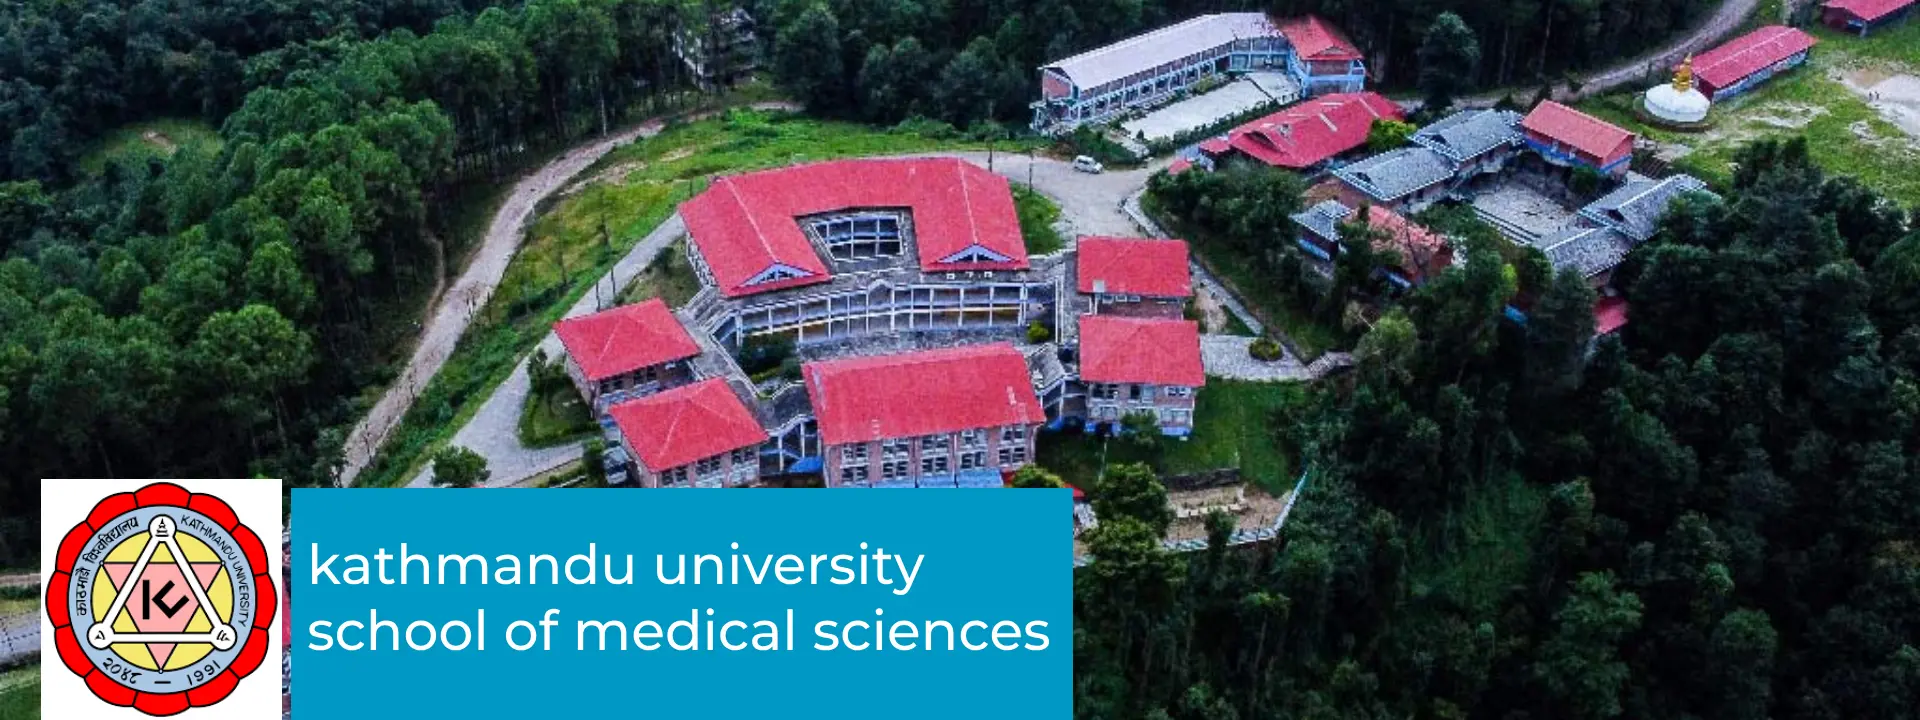 kathmandu university school of medical sciences